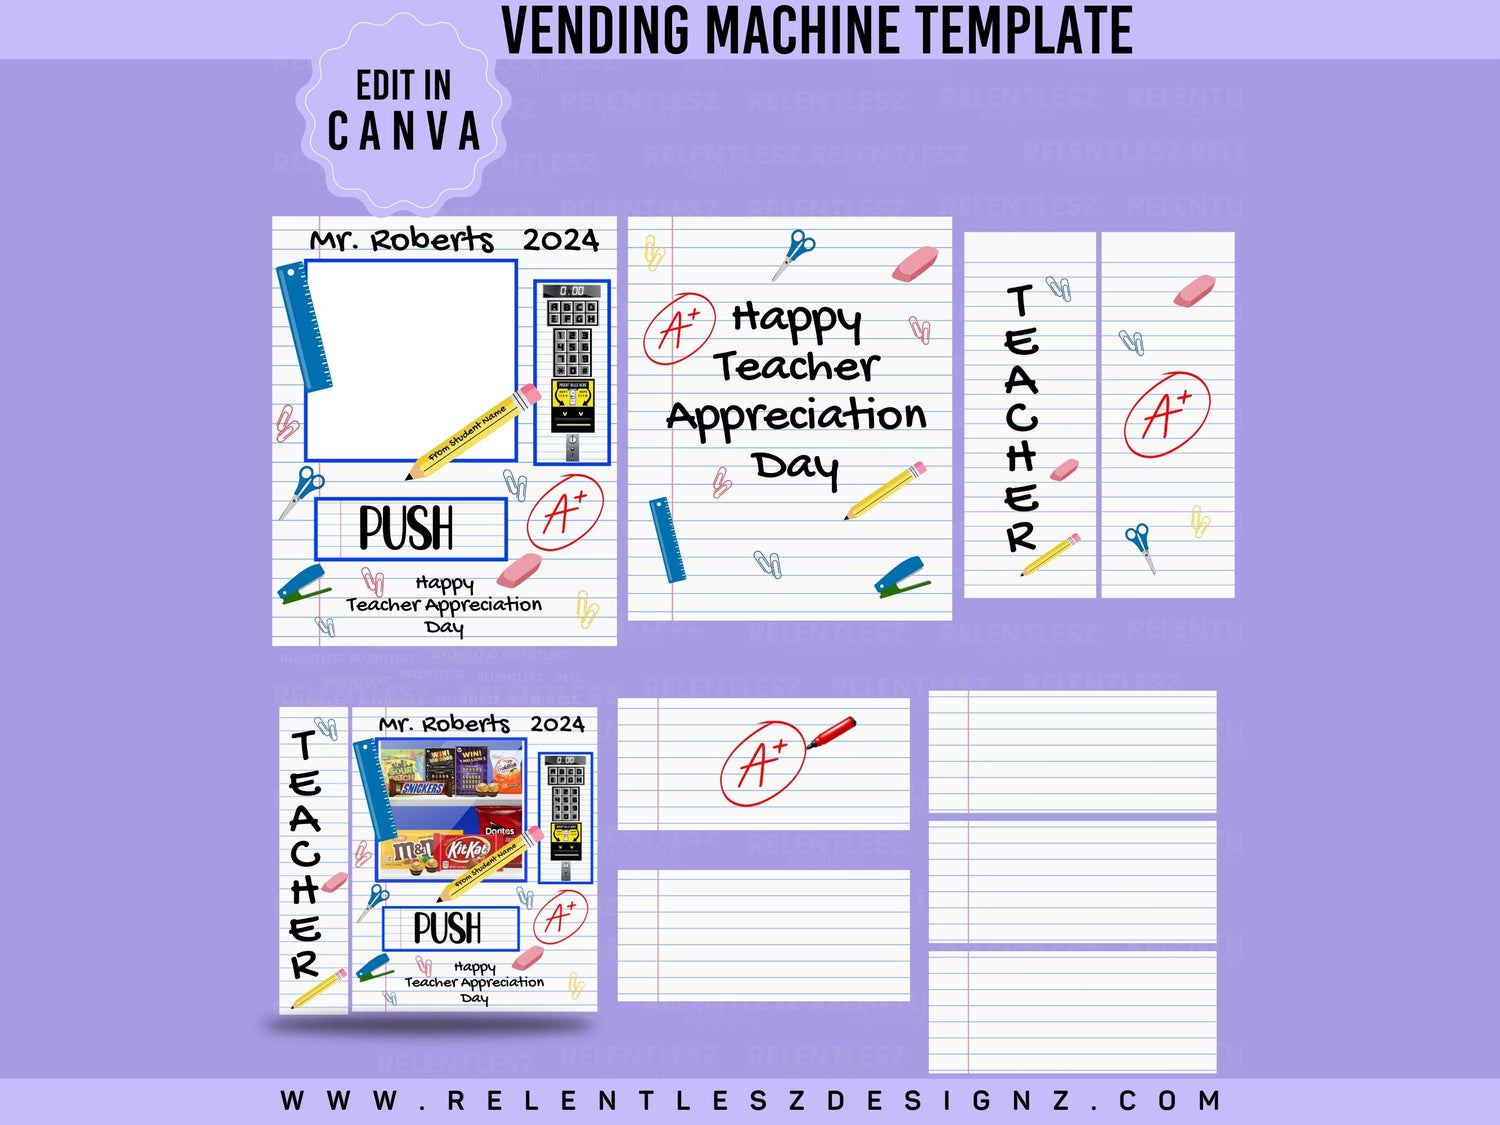 Teacher’s Appreciation Day Vending Machine Template, Lined Paper, School Supplies, A+, Teacher Name, Pencils edit in Canva File